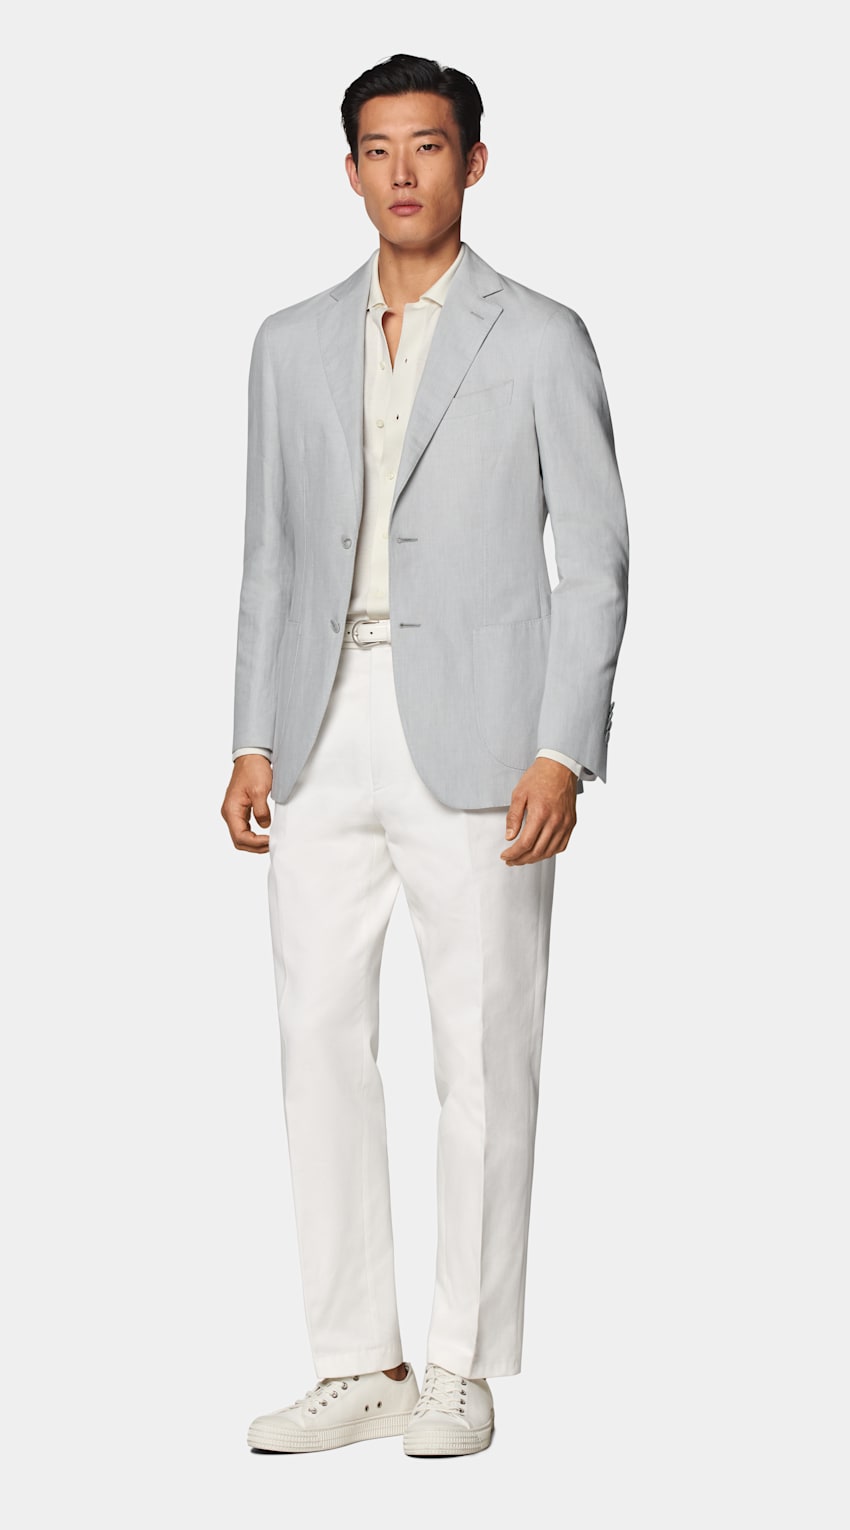 SUITSUPPLY Linen Cotton by Di Sondrio, Italy Light Grey Havana Jacket